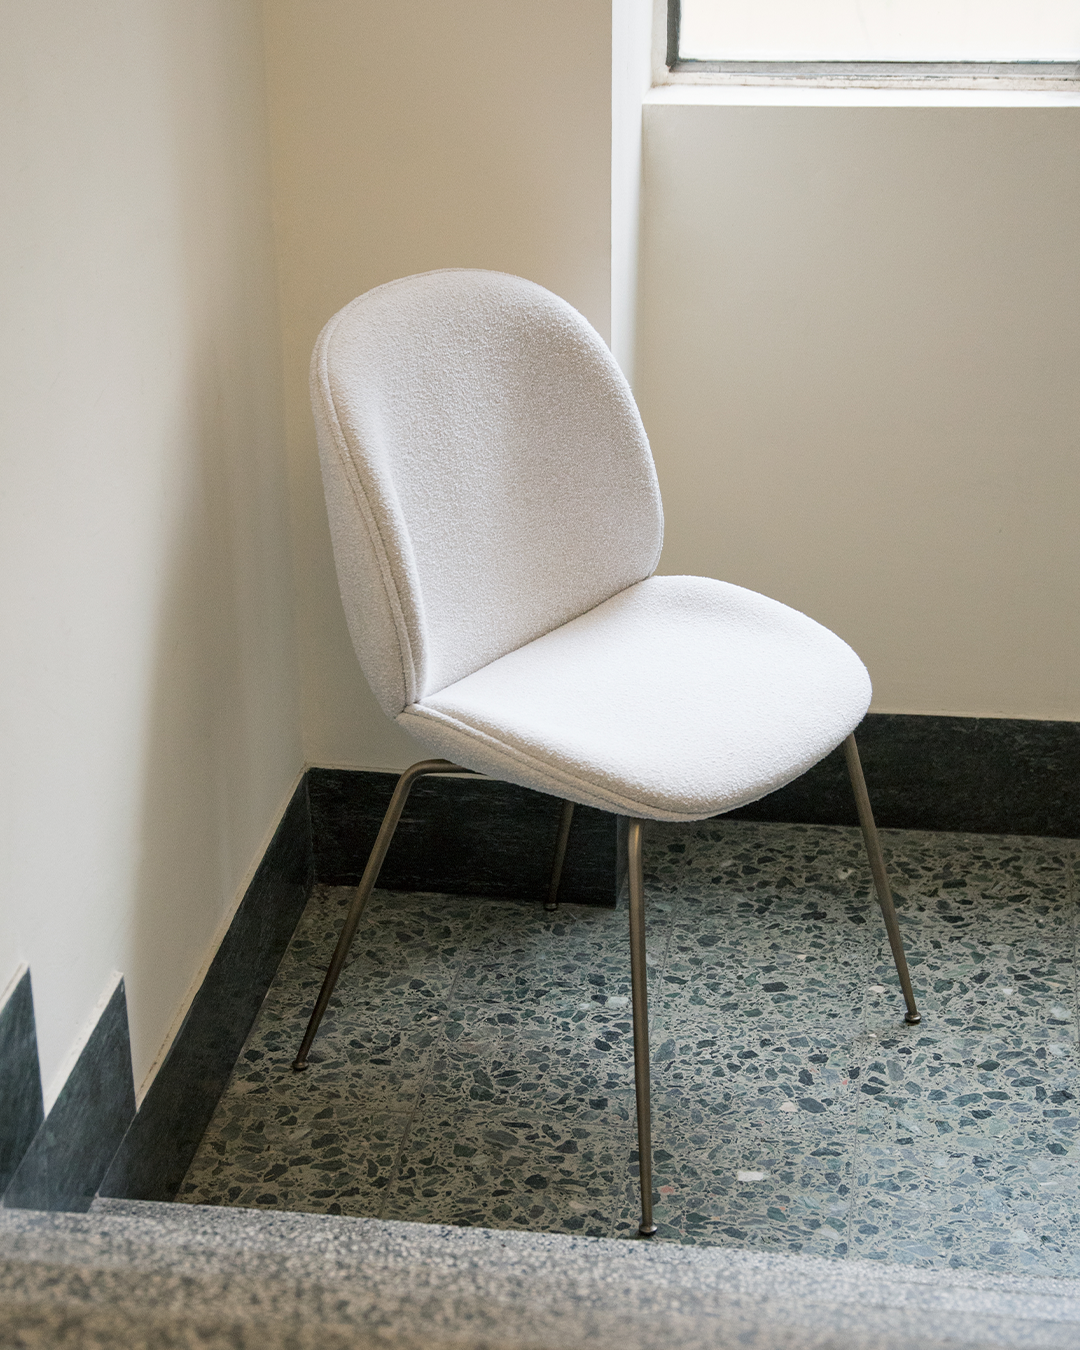 Beetle Chair designed by Gamfratesi for GUBI